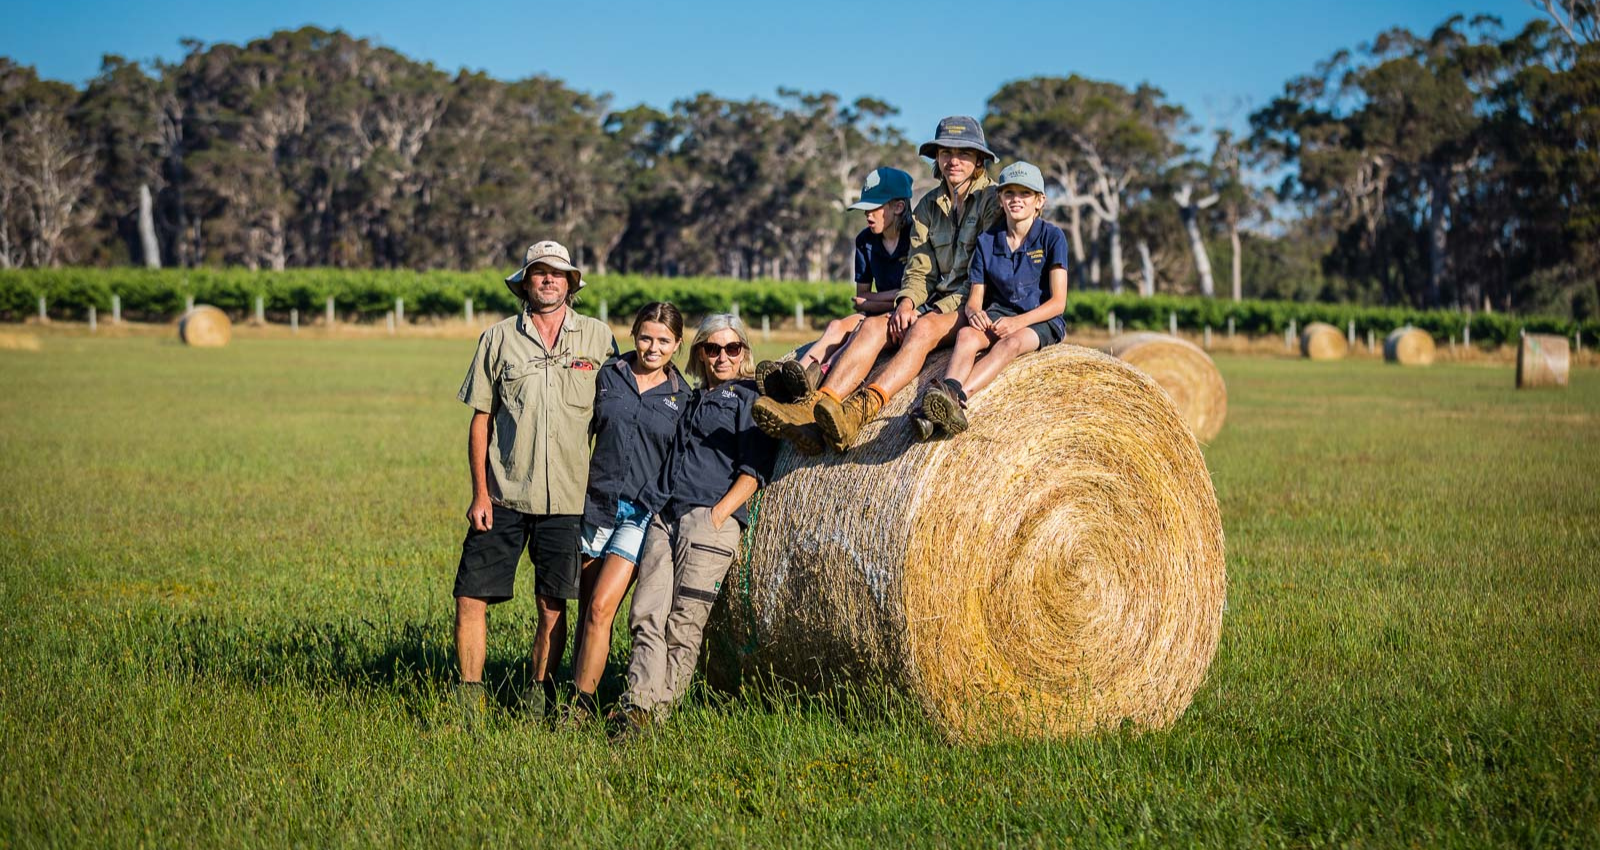 Jilyara Family in the vineyard on the hay